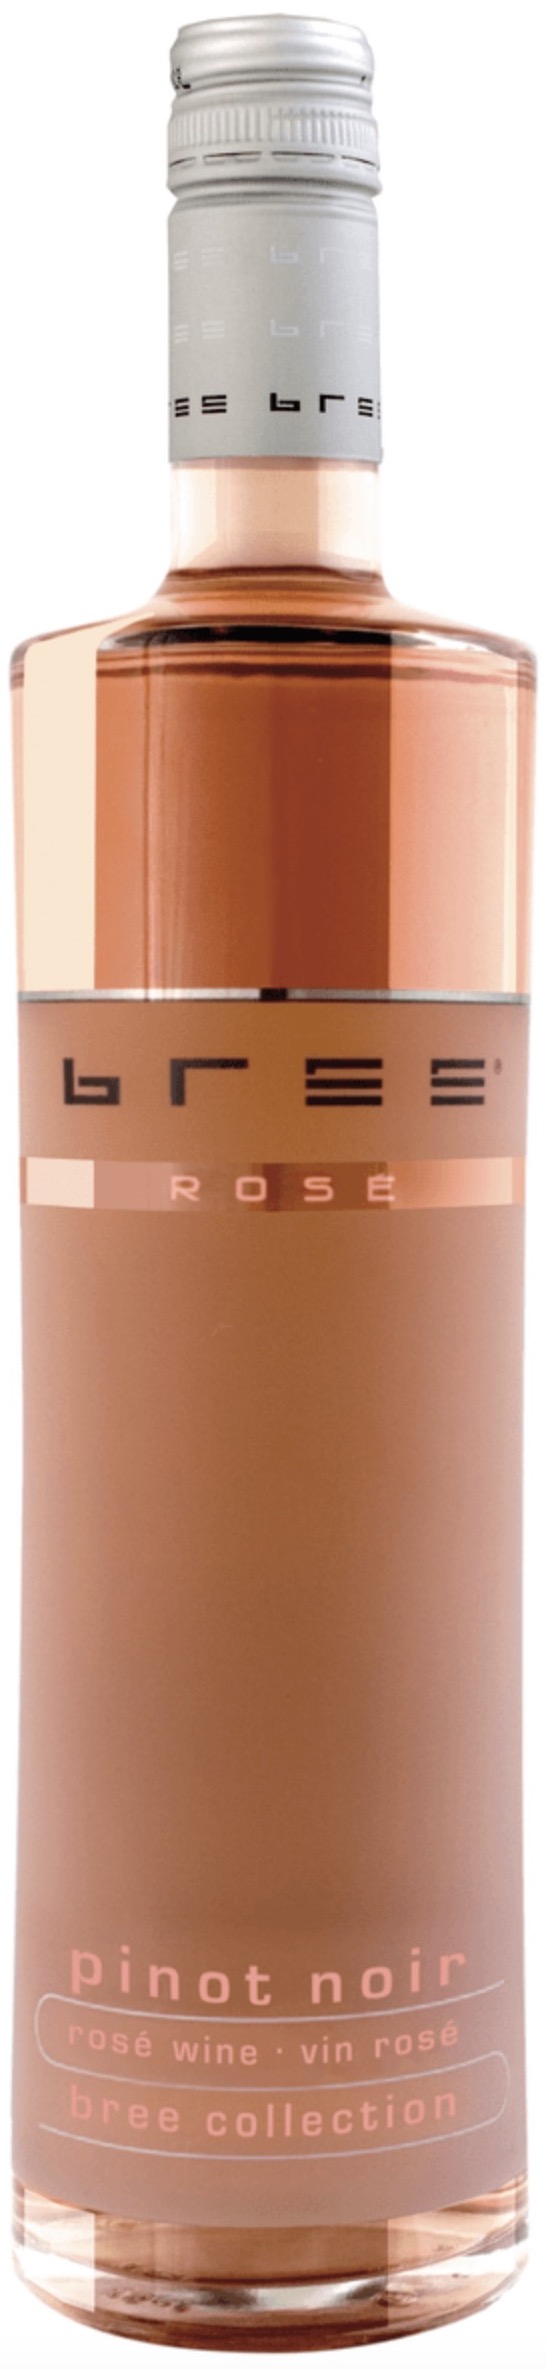 Bree Pinot Noir Rose 12% vol. 0,75L